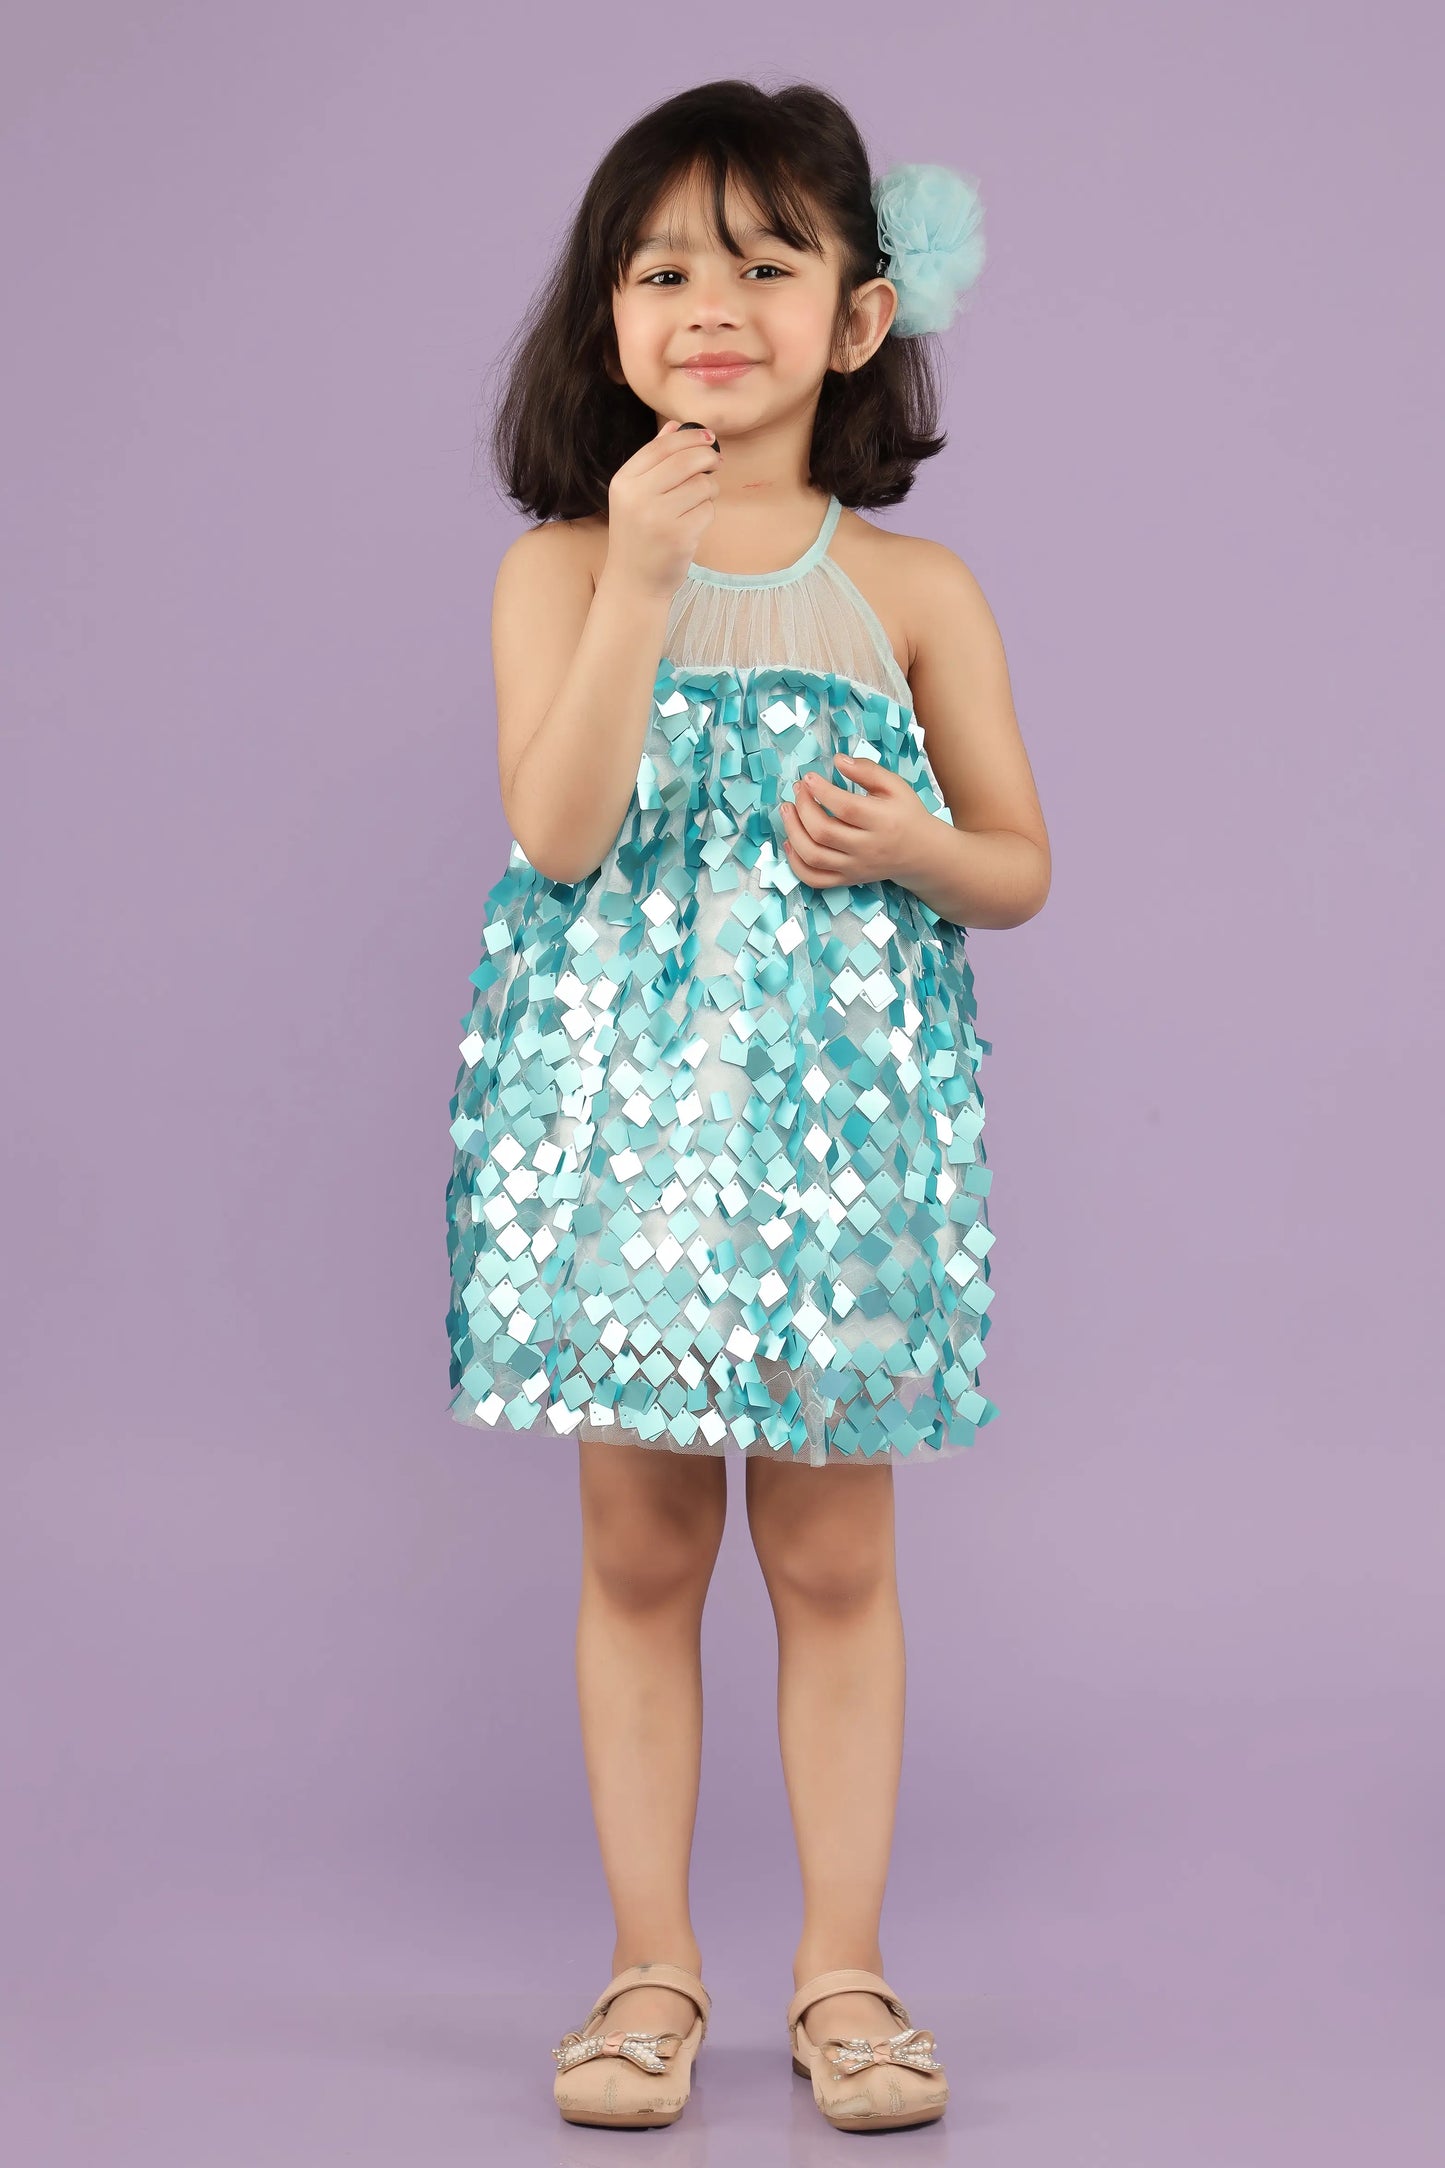 Sparkling Tunic Dress for Girls